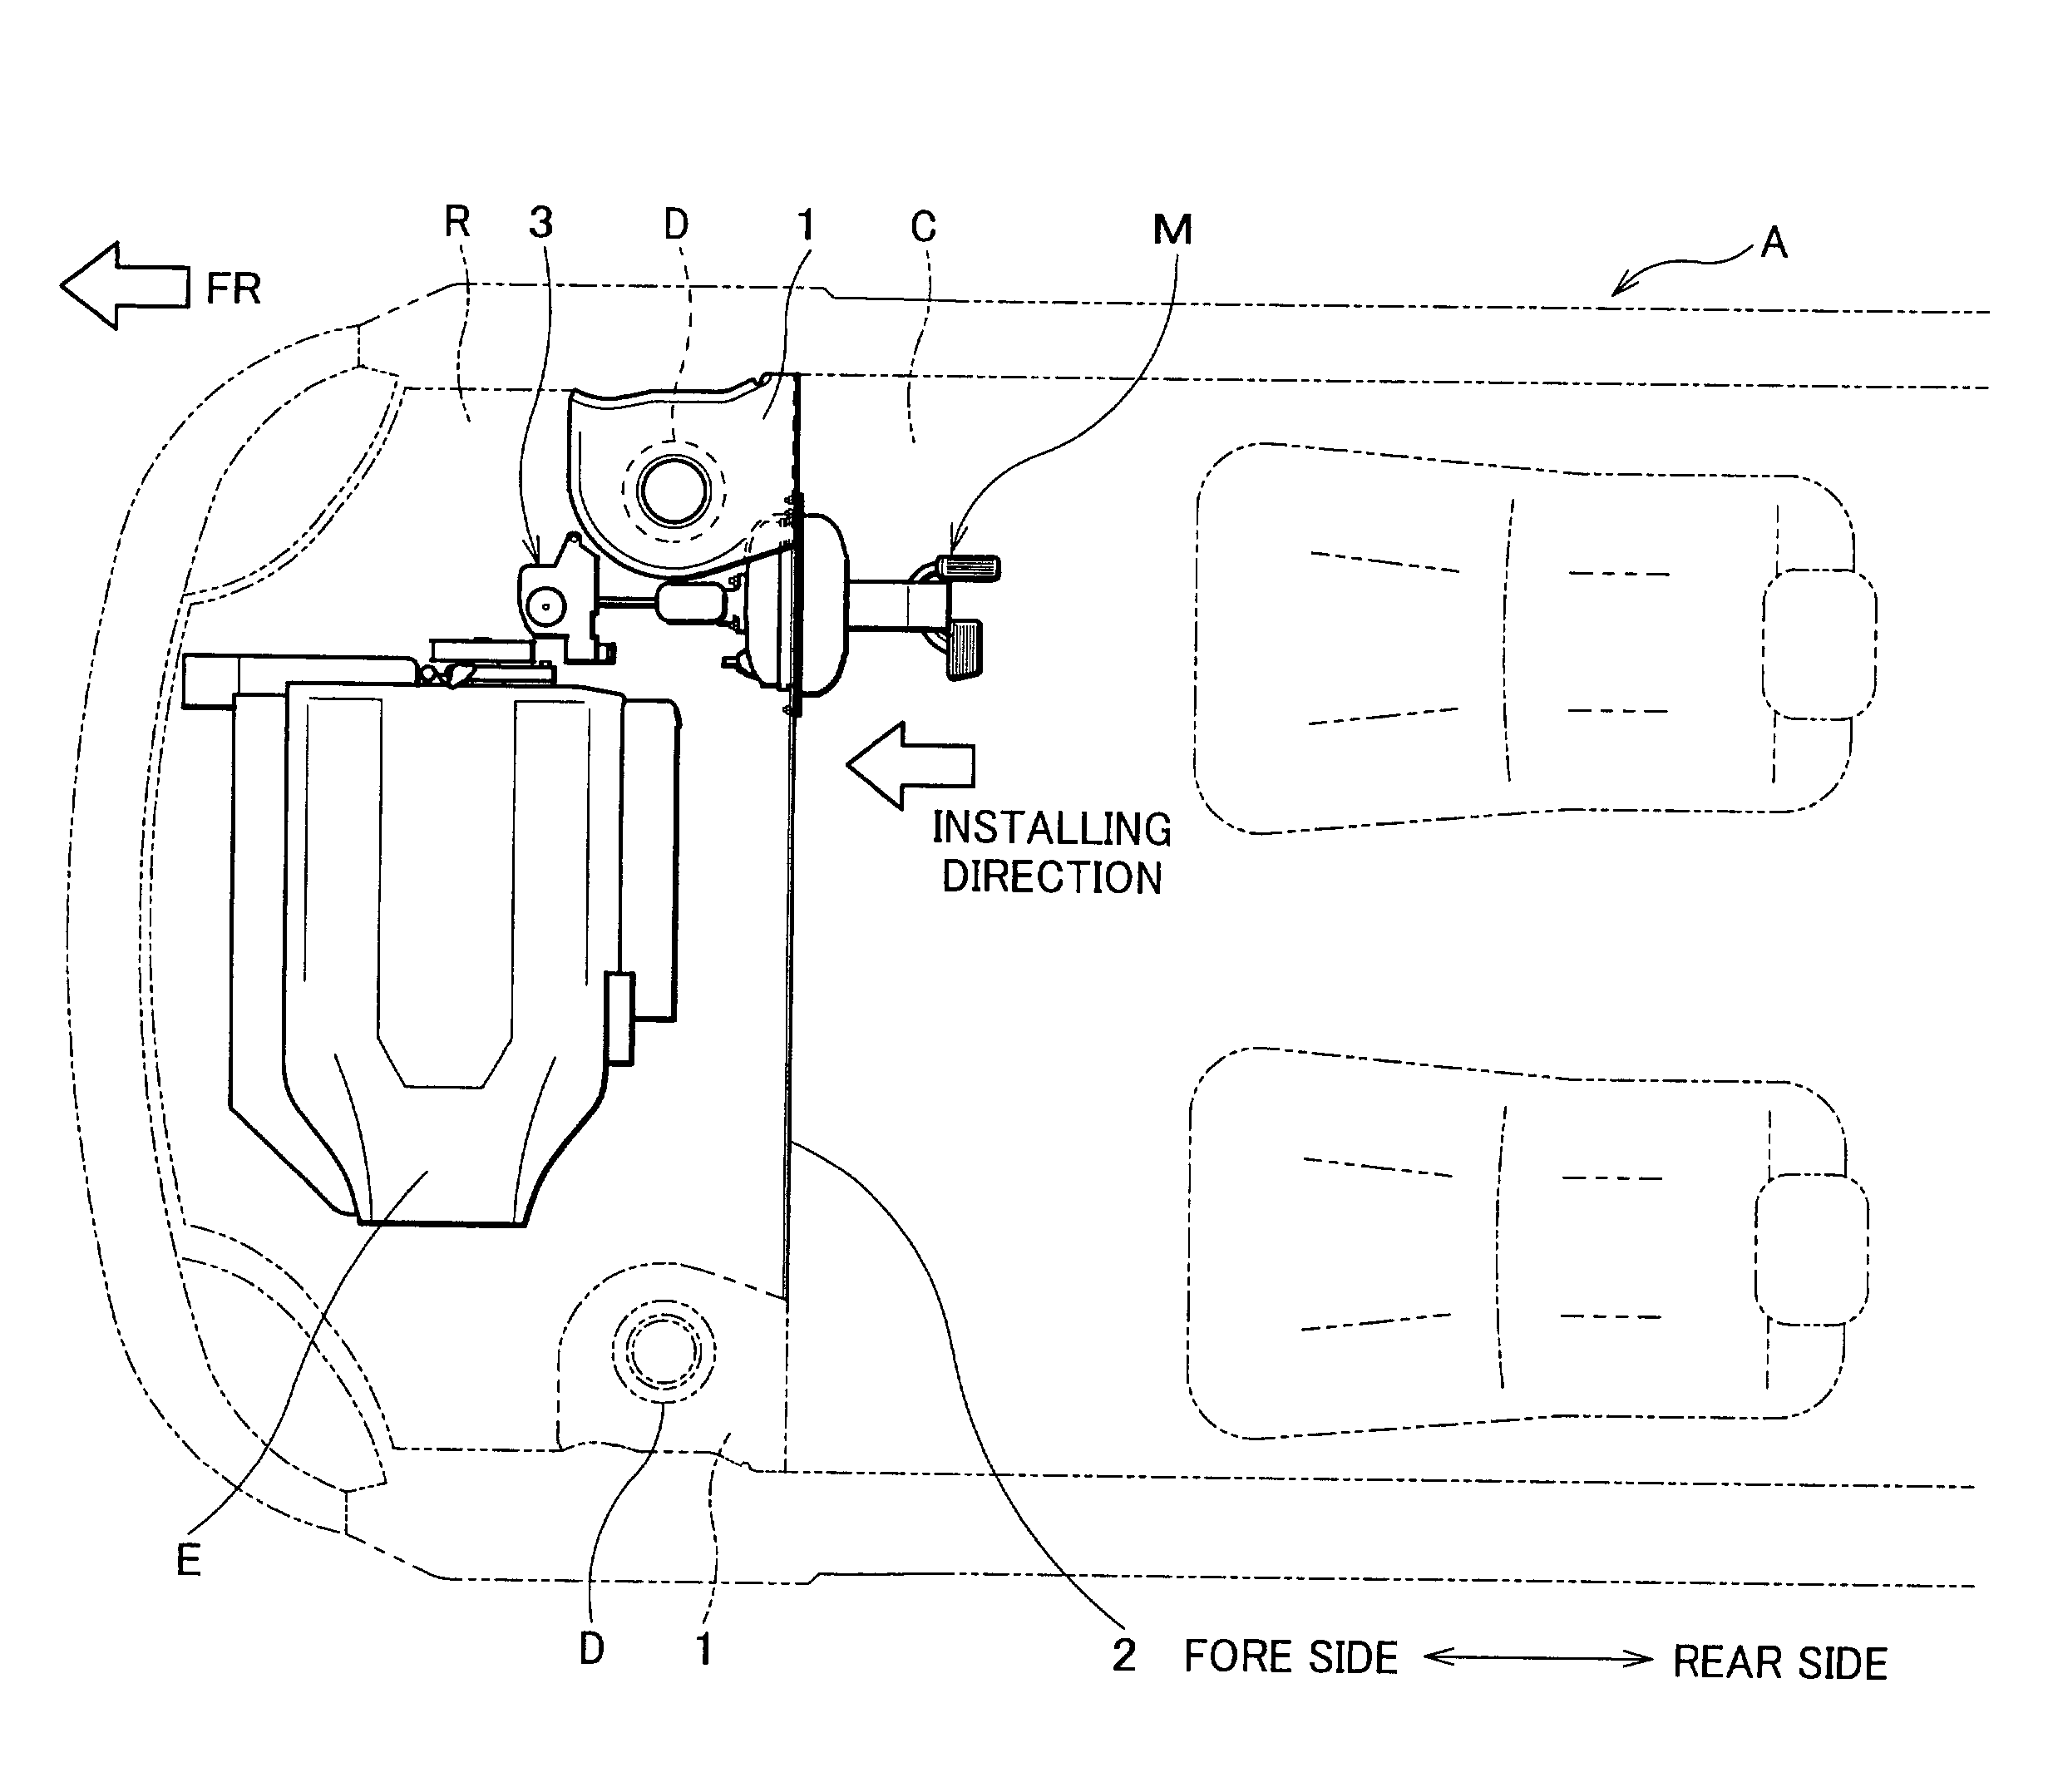 Attaching structure of a brake fluid pressure generator